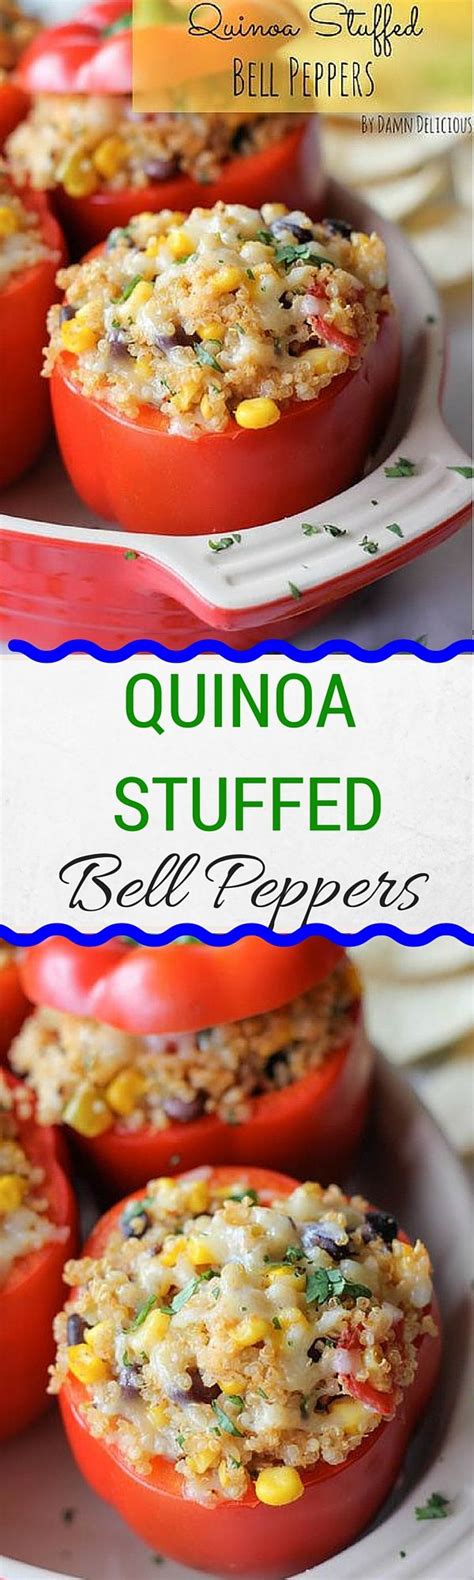 quinoa stuffed peppers recipe gluten free and vegetarian wendy polisi